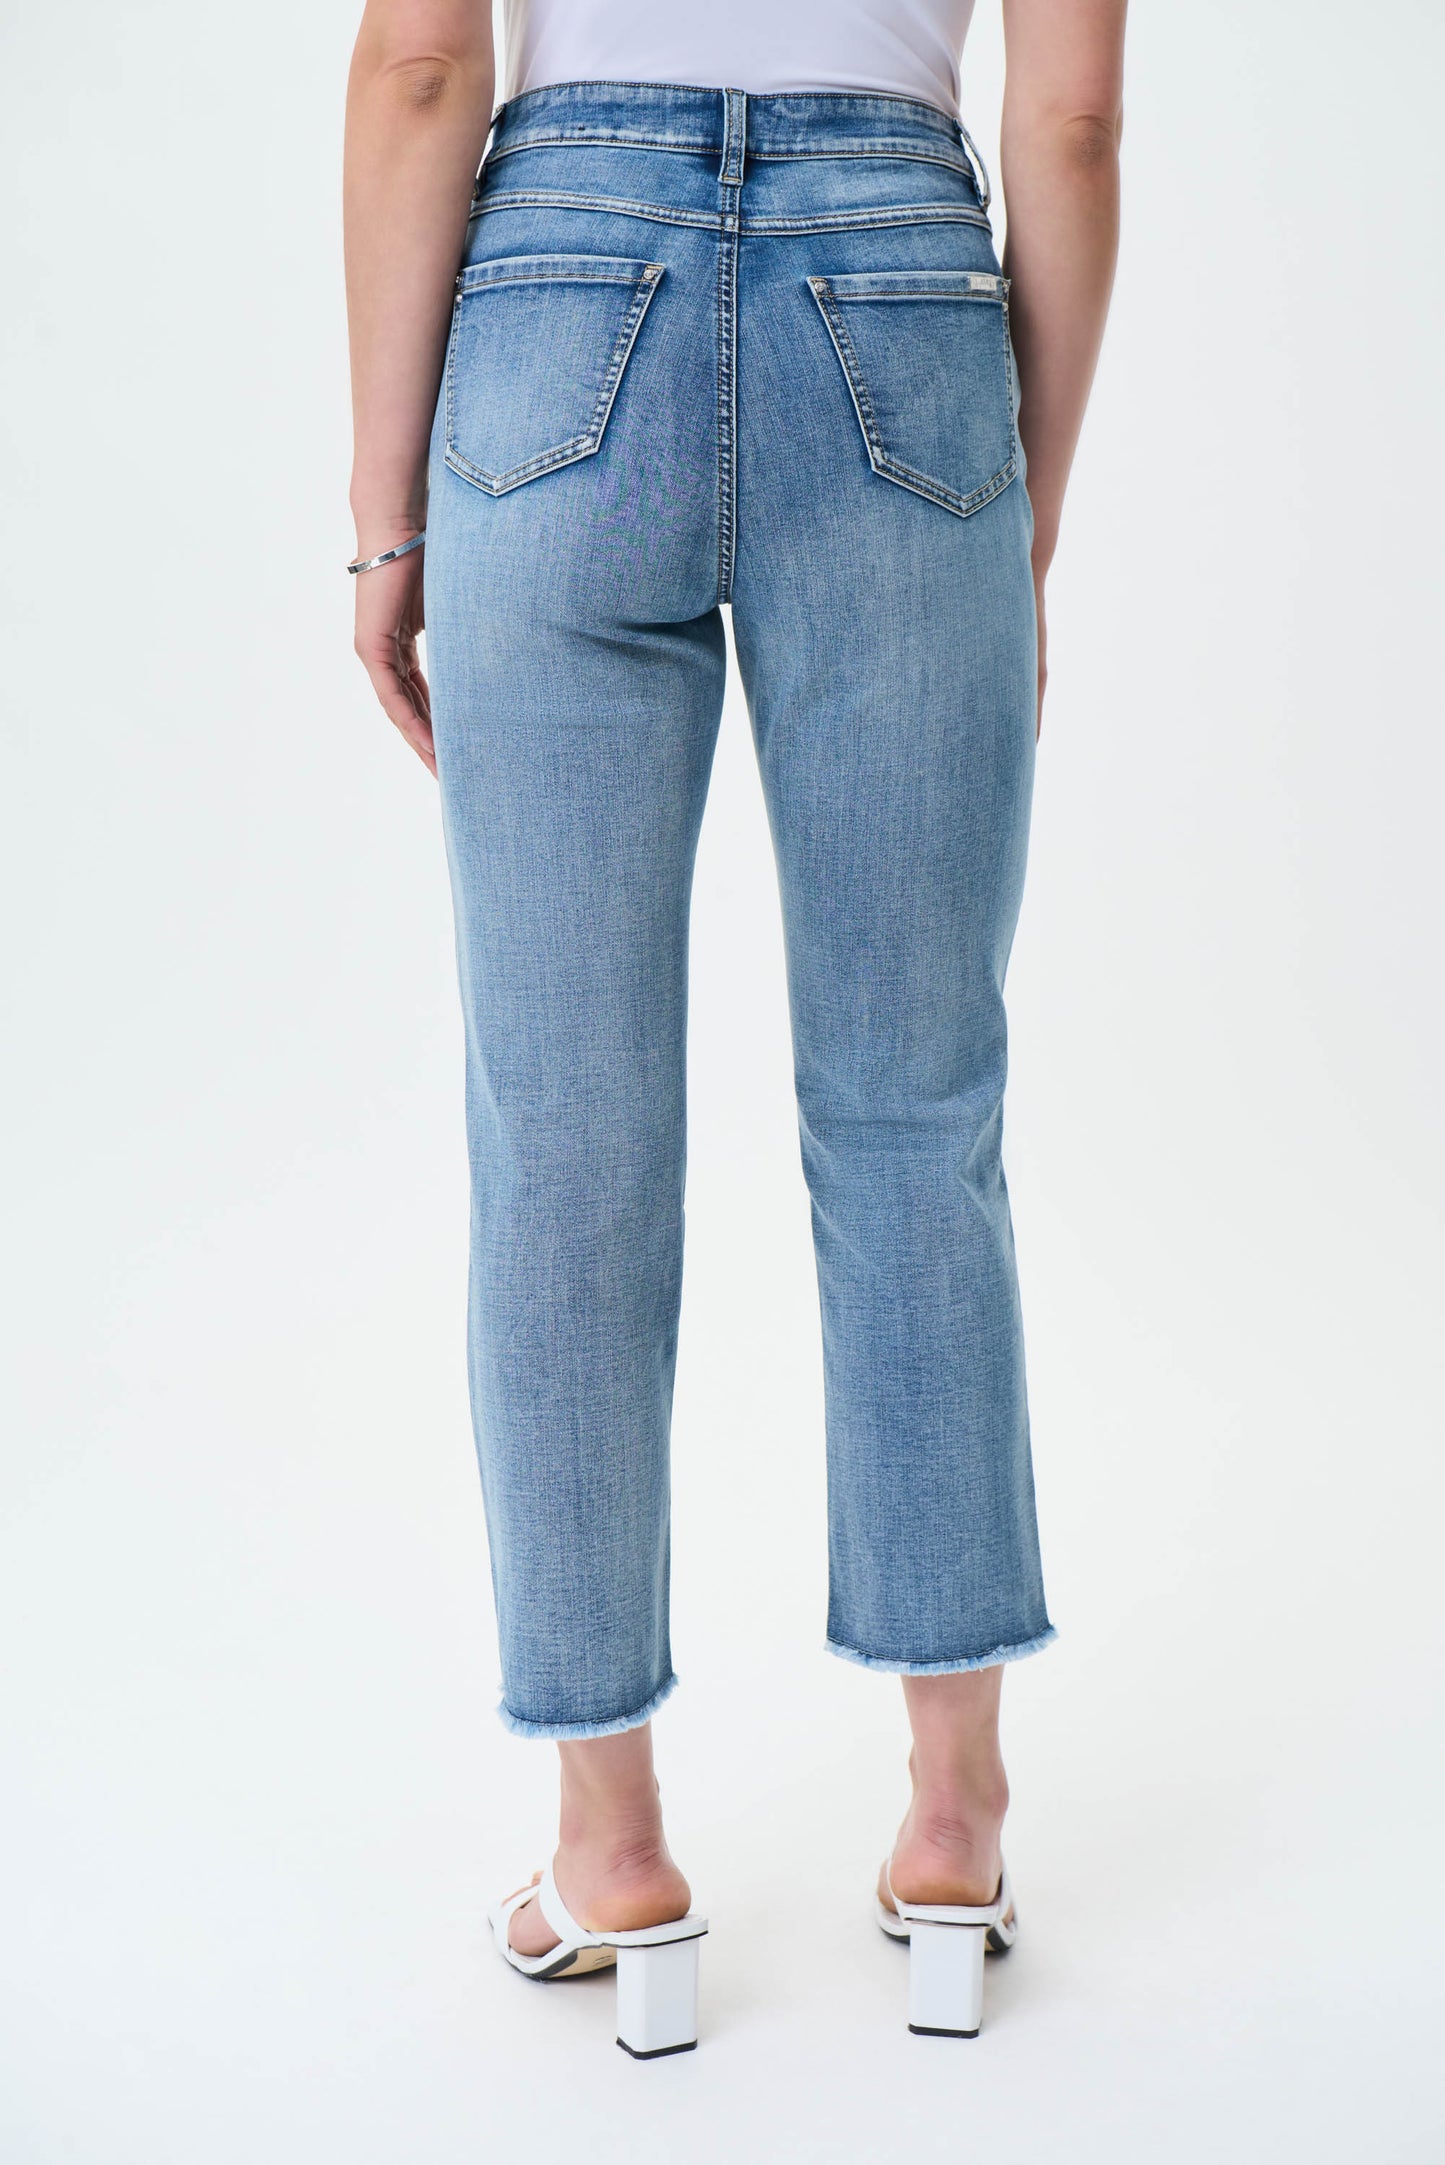 Joseph Ribkoff Vintage Crop Jeans